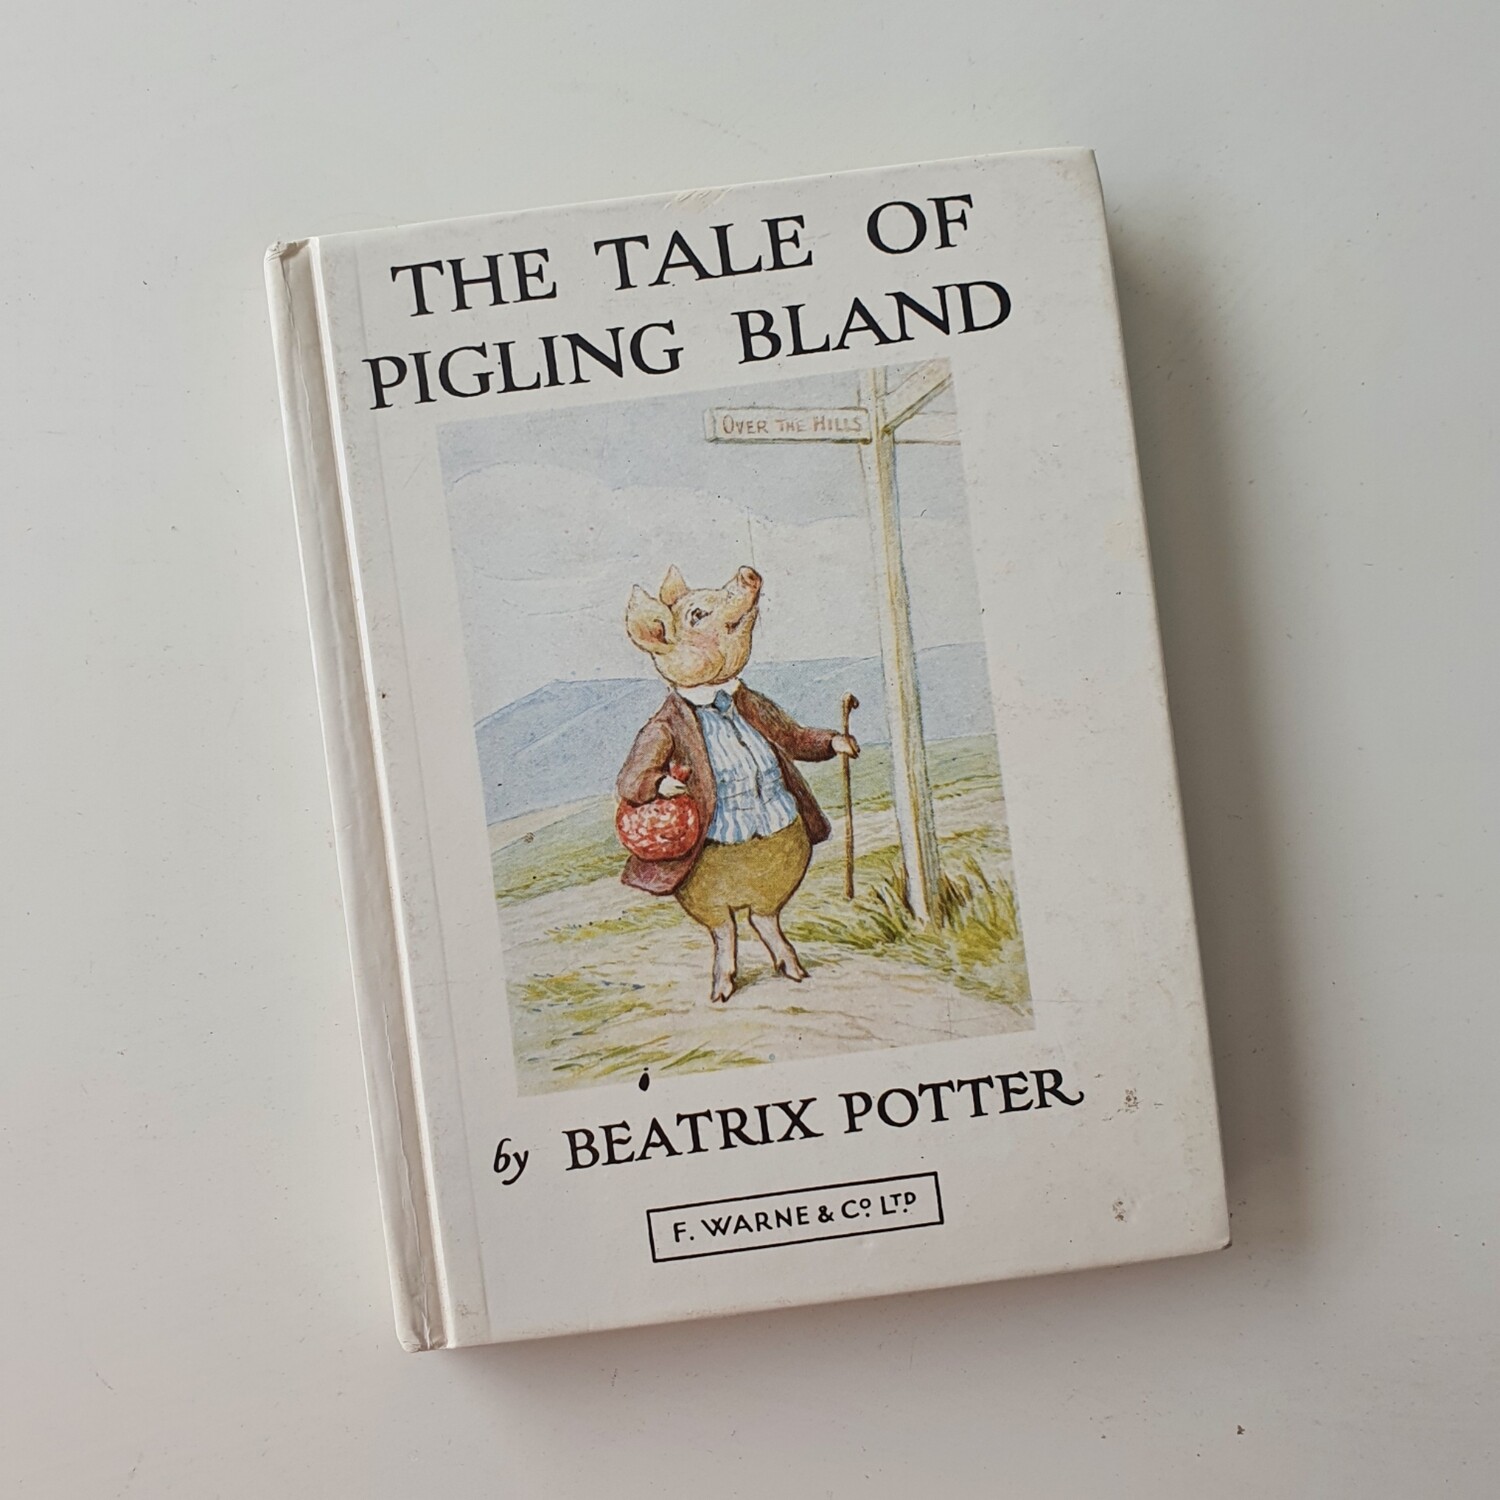 Pigling Bland Notebook - Beatrix Potter